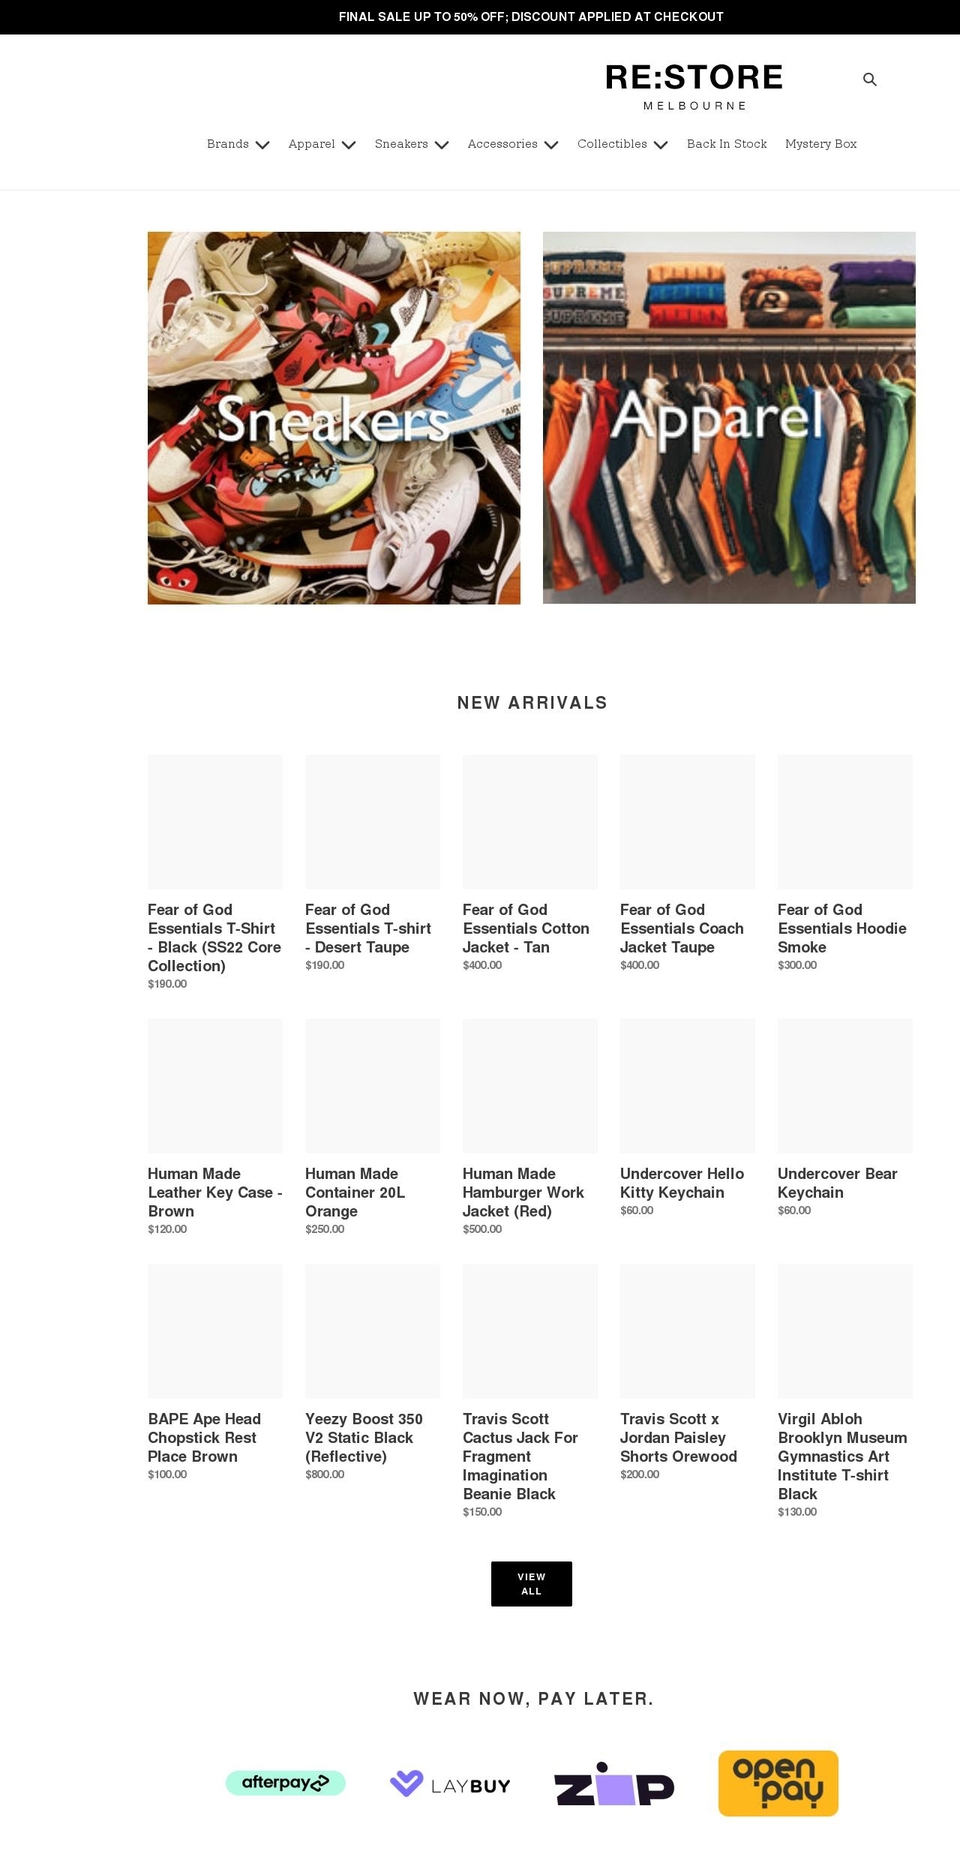 restore.melbourne shopify website screenshot